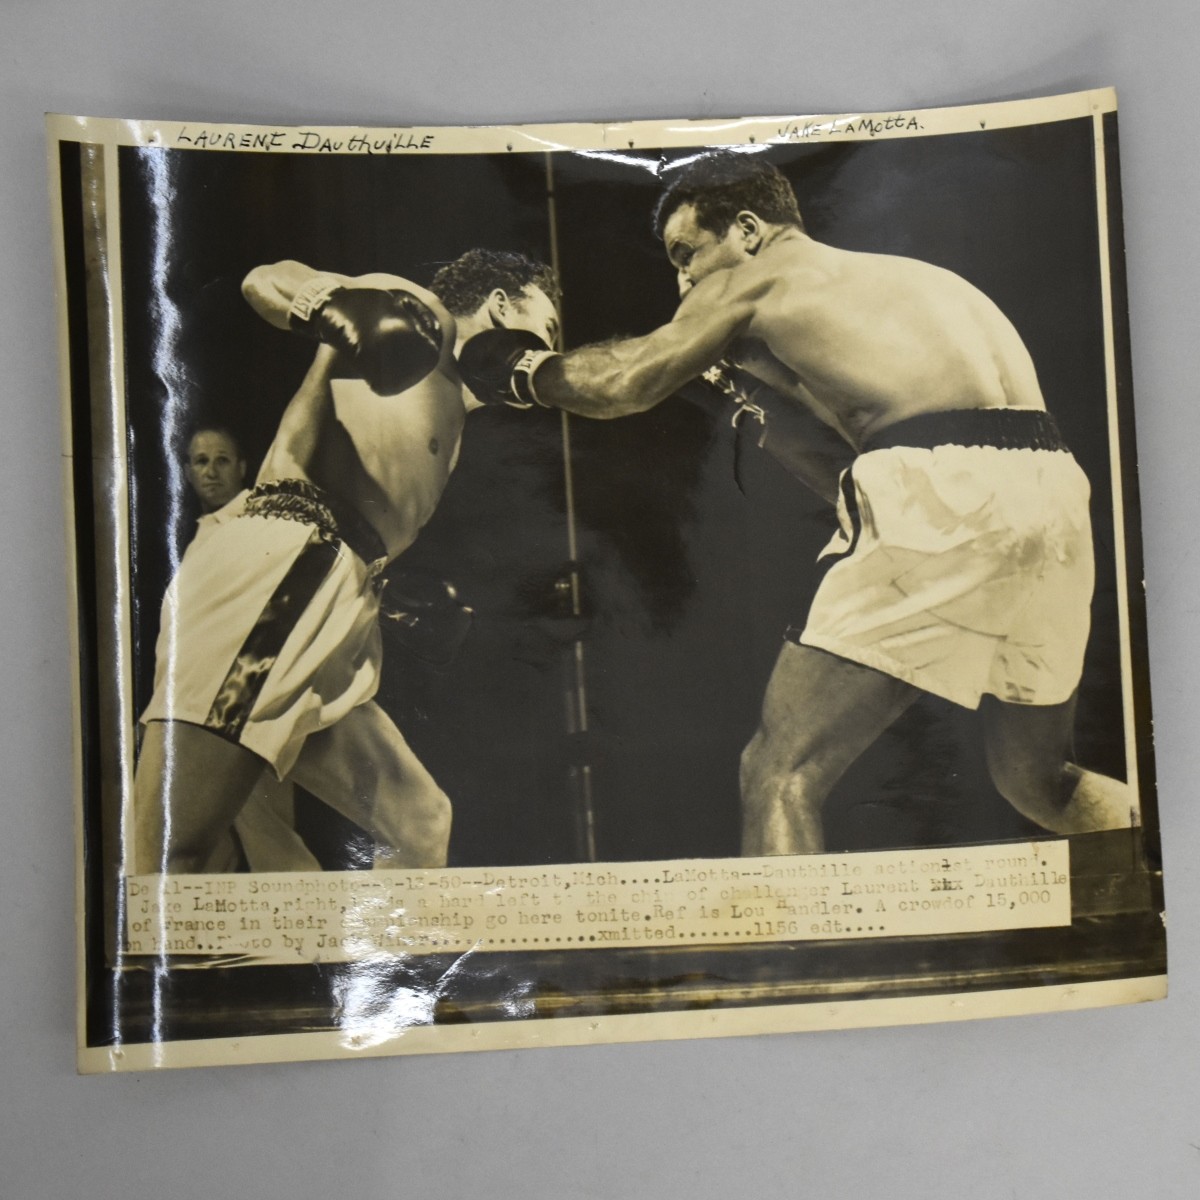 Jake LaMotta Boxing Photograph Memorabilia